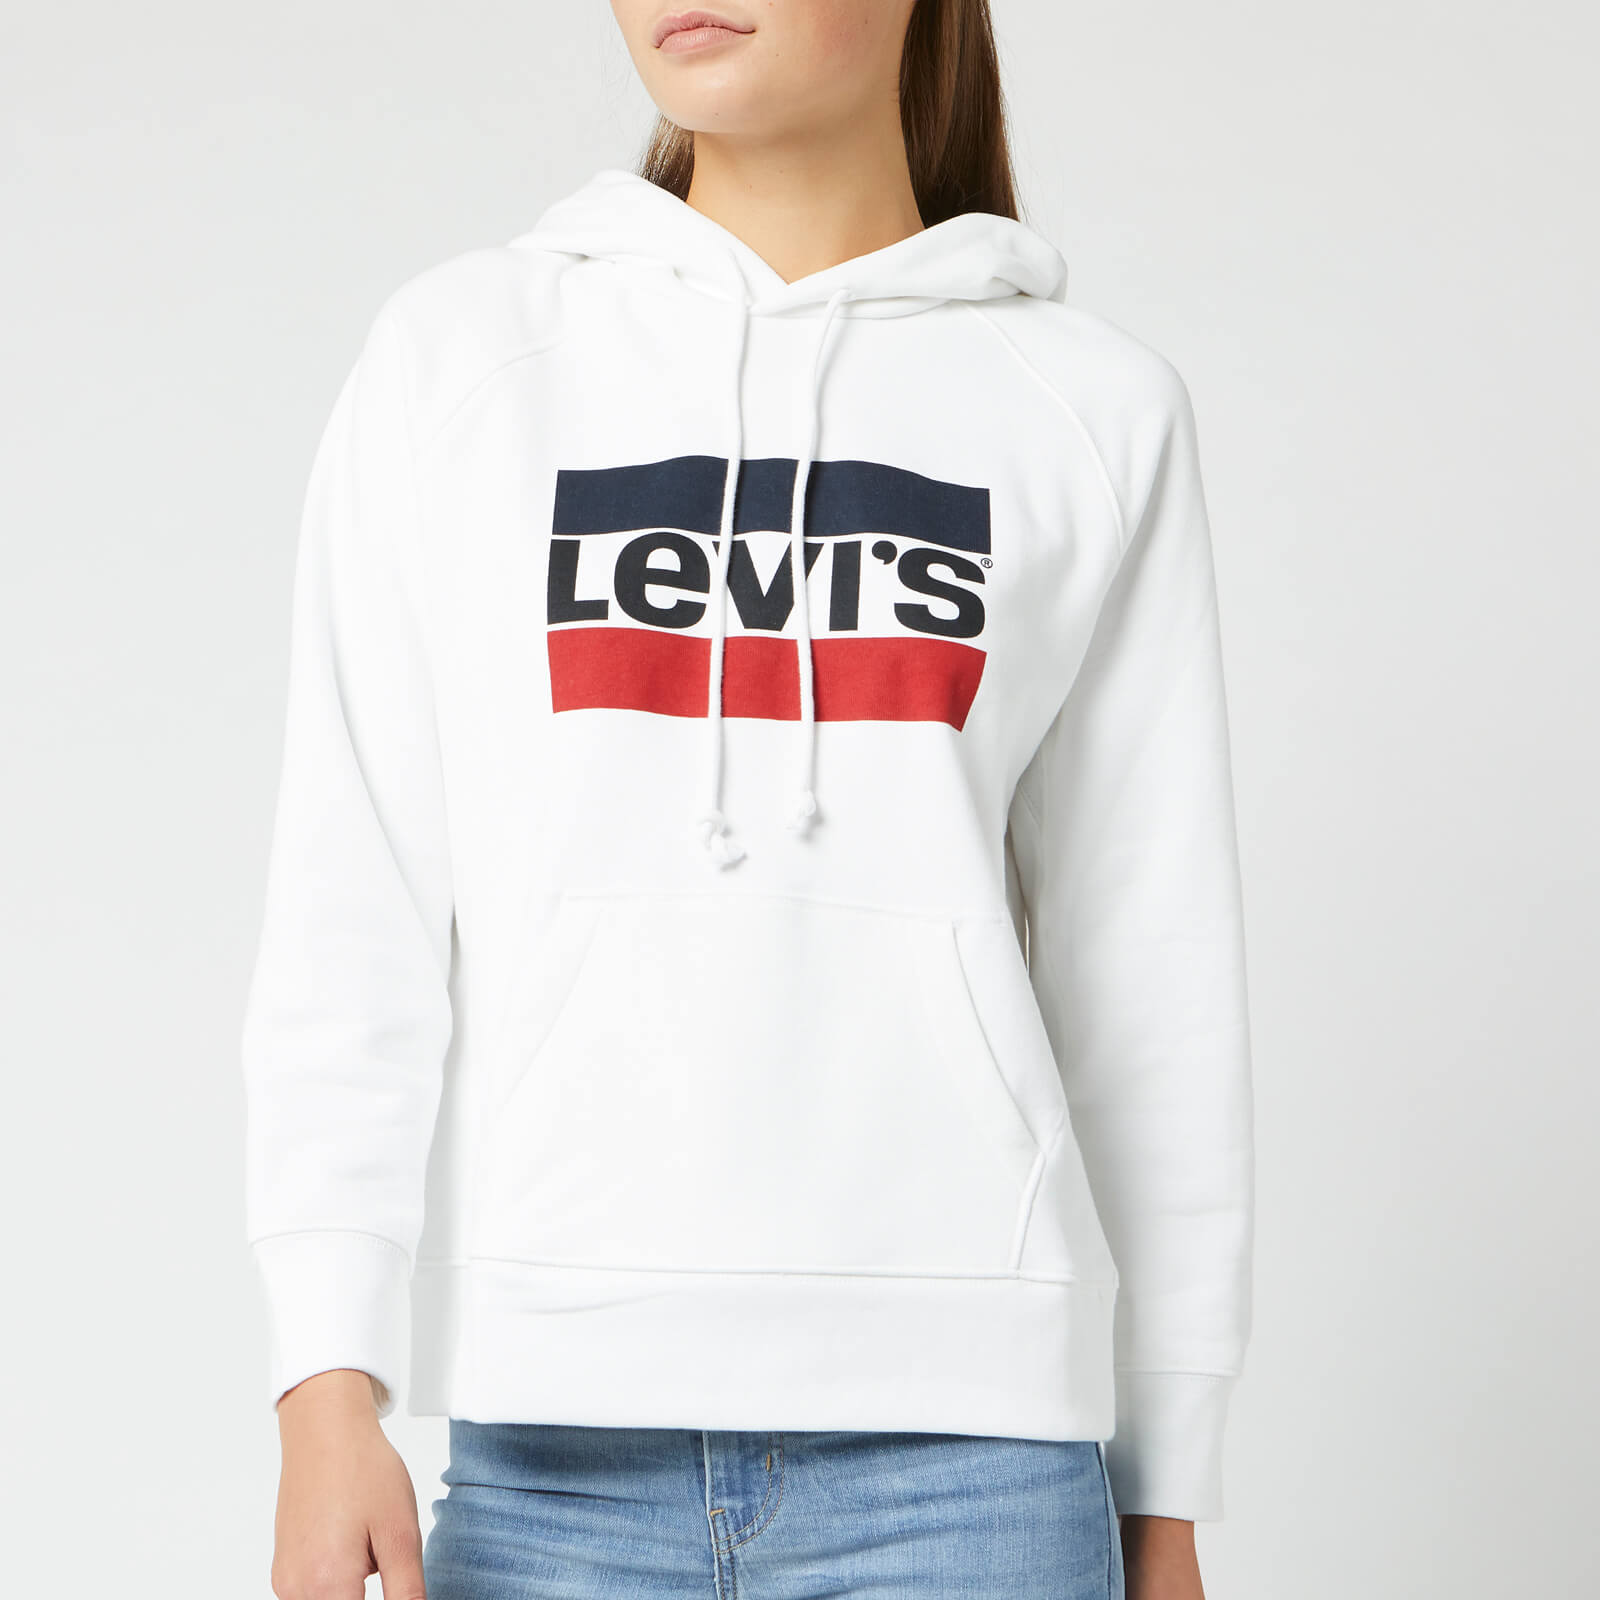 Levi's Women's Graphic Sport Hoodie - White - S - White